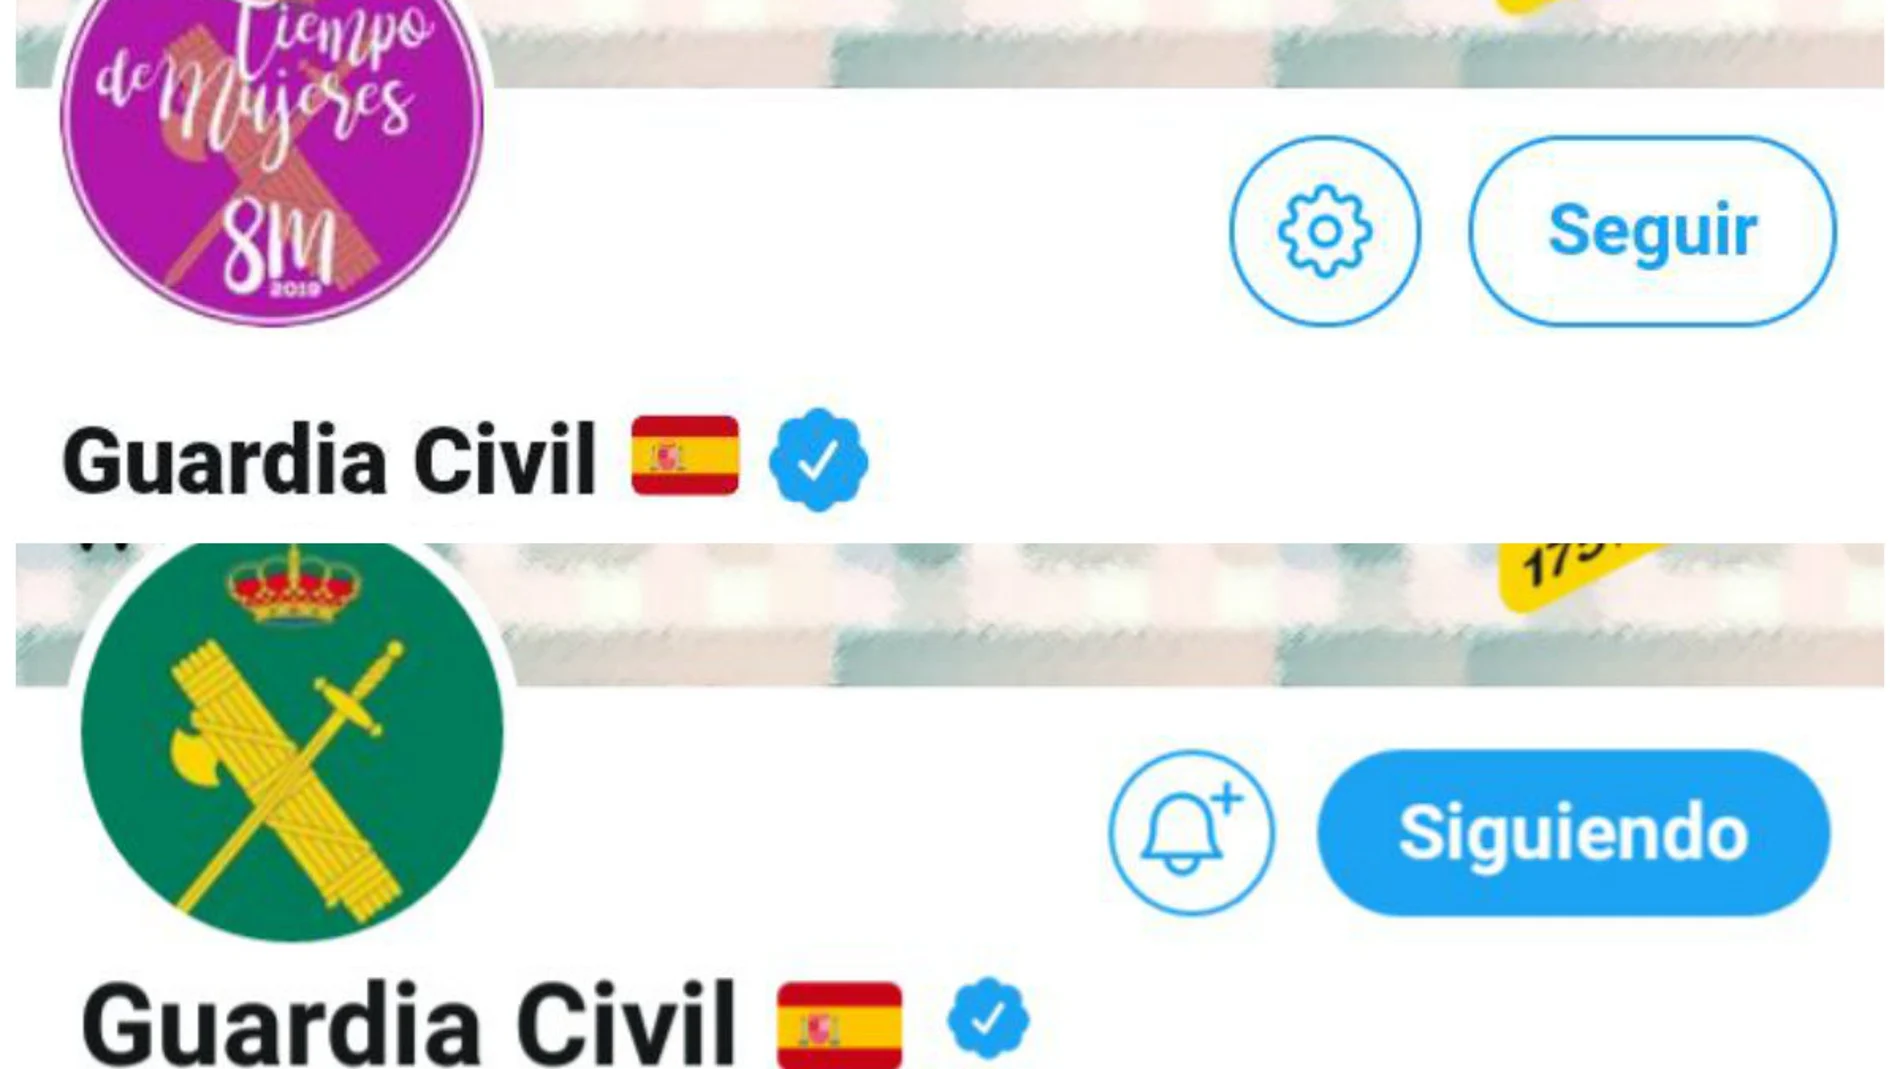 La Guardia Civil retira el logo de la huelga del 8M de su perfil de Twitter ante las críticas